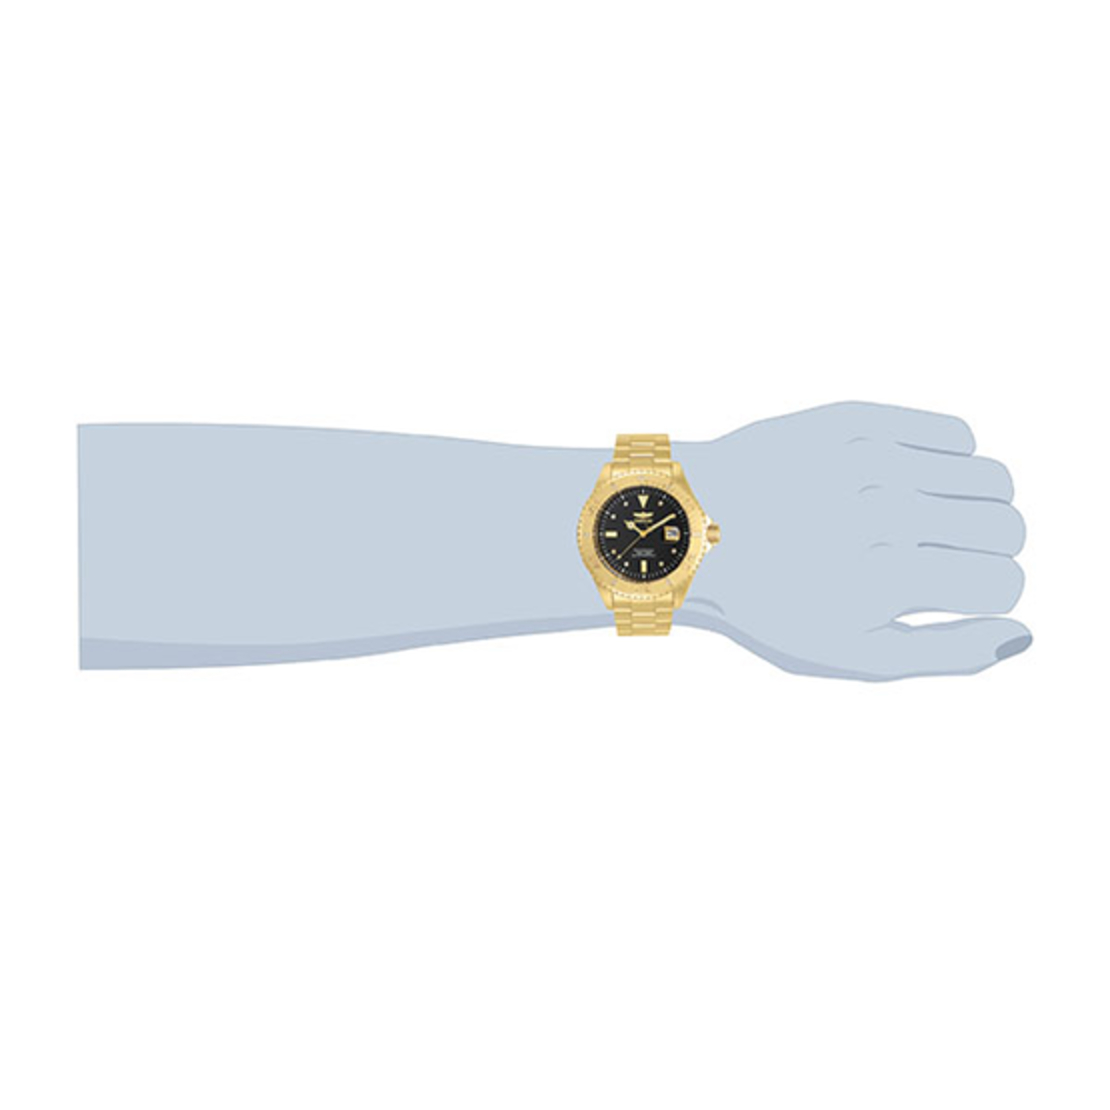 שעון Invicta Pro Diver לגבר דגם 15286